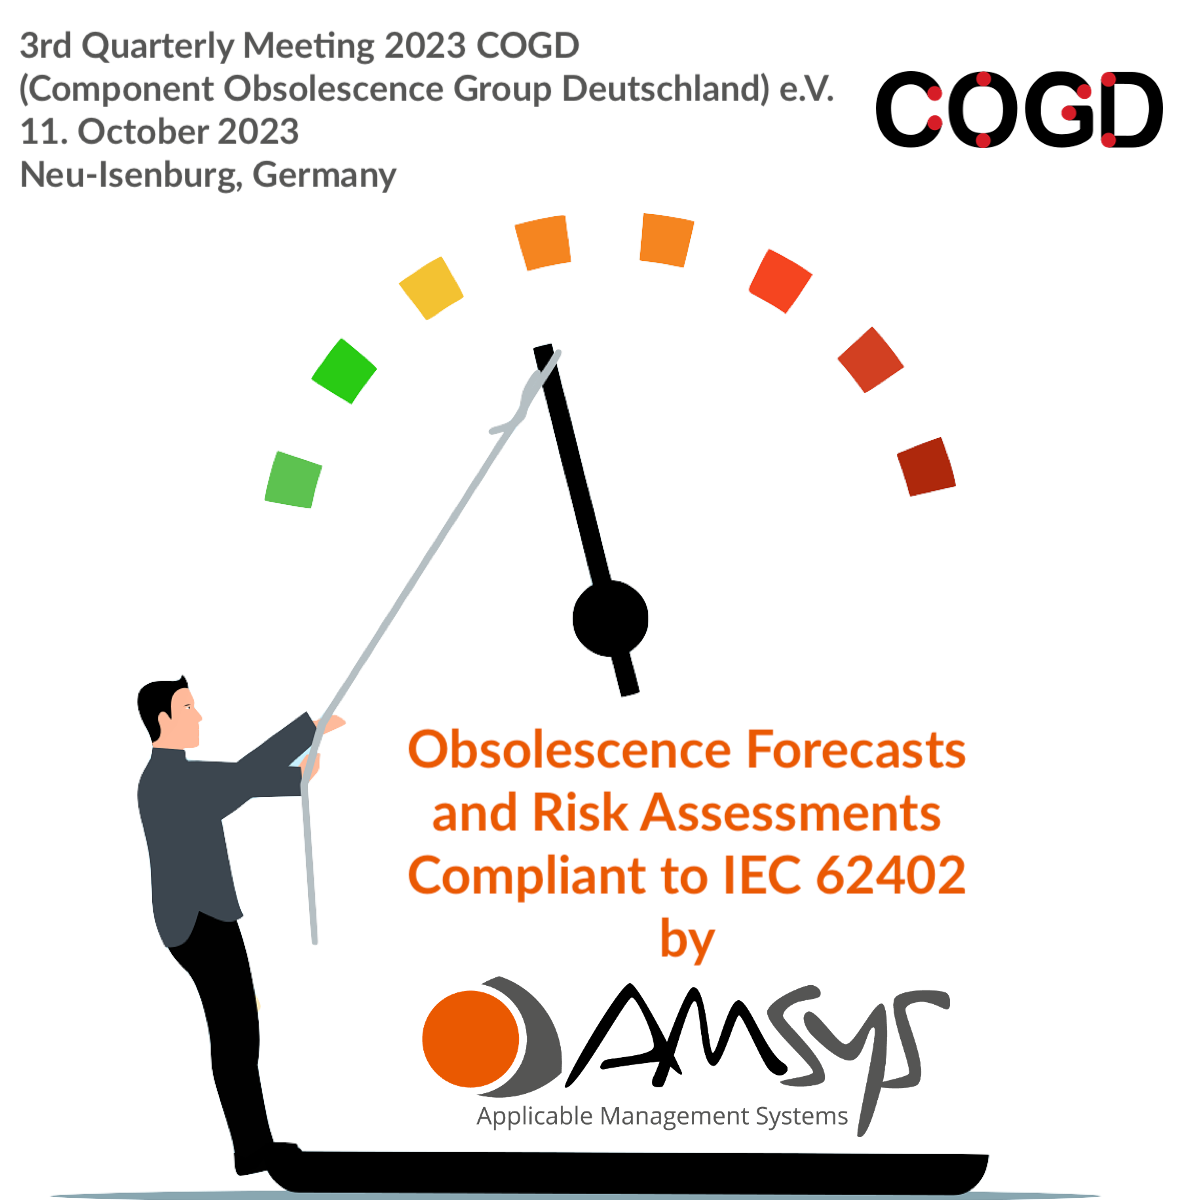 COGD presentation at 3rd quarterly meeting on October 11, 2023